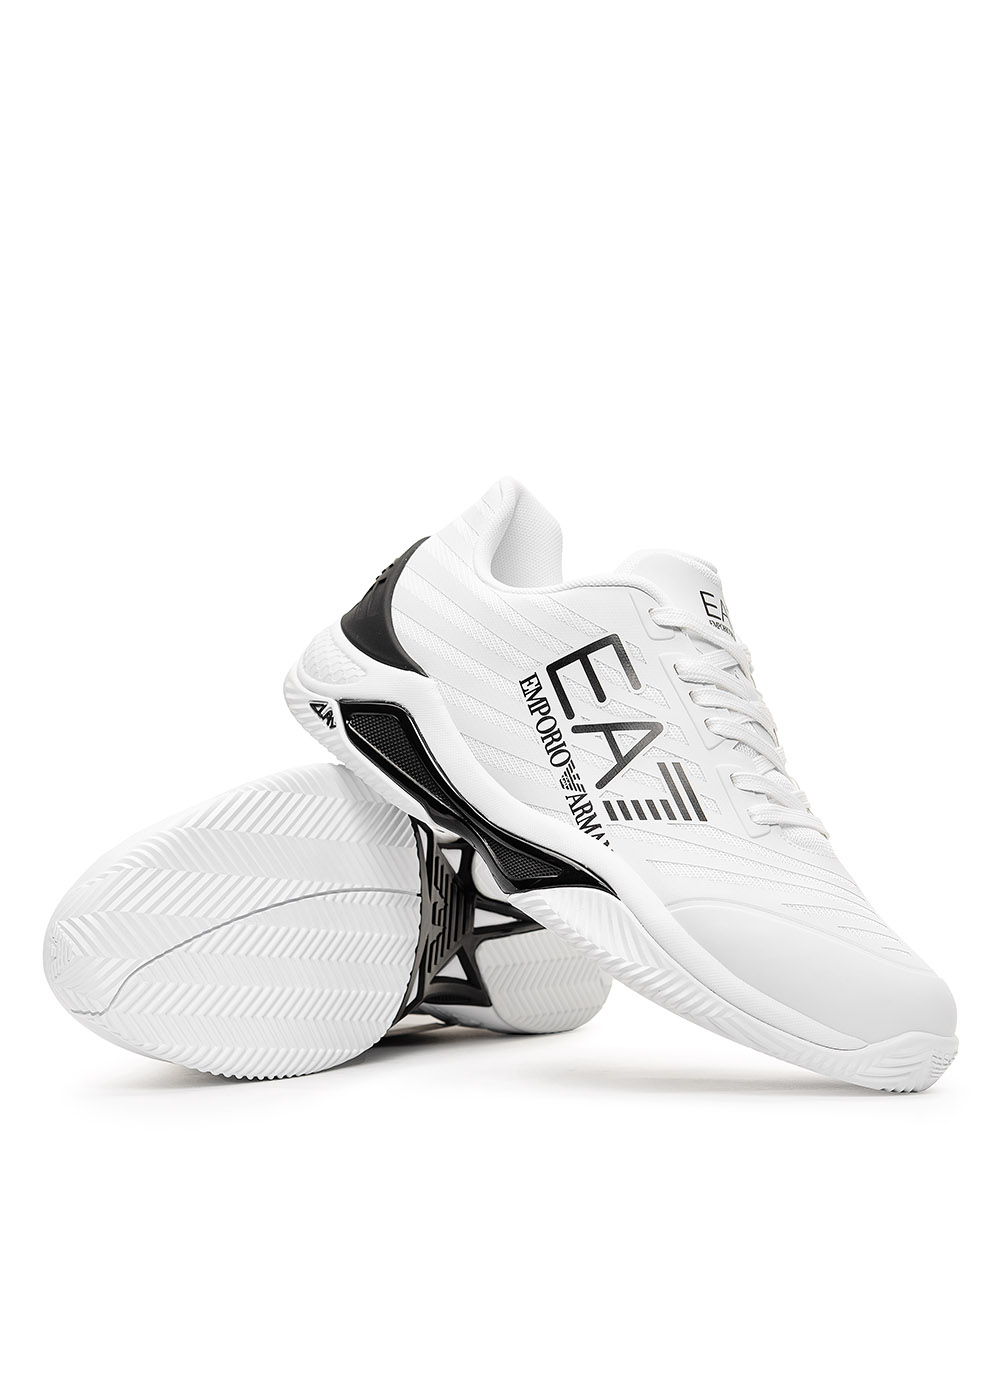 EA7 Emporio Armani New Tennis (X8X079 XK203 D611) 205,99 € - Sneaker ...